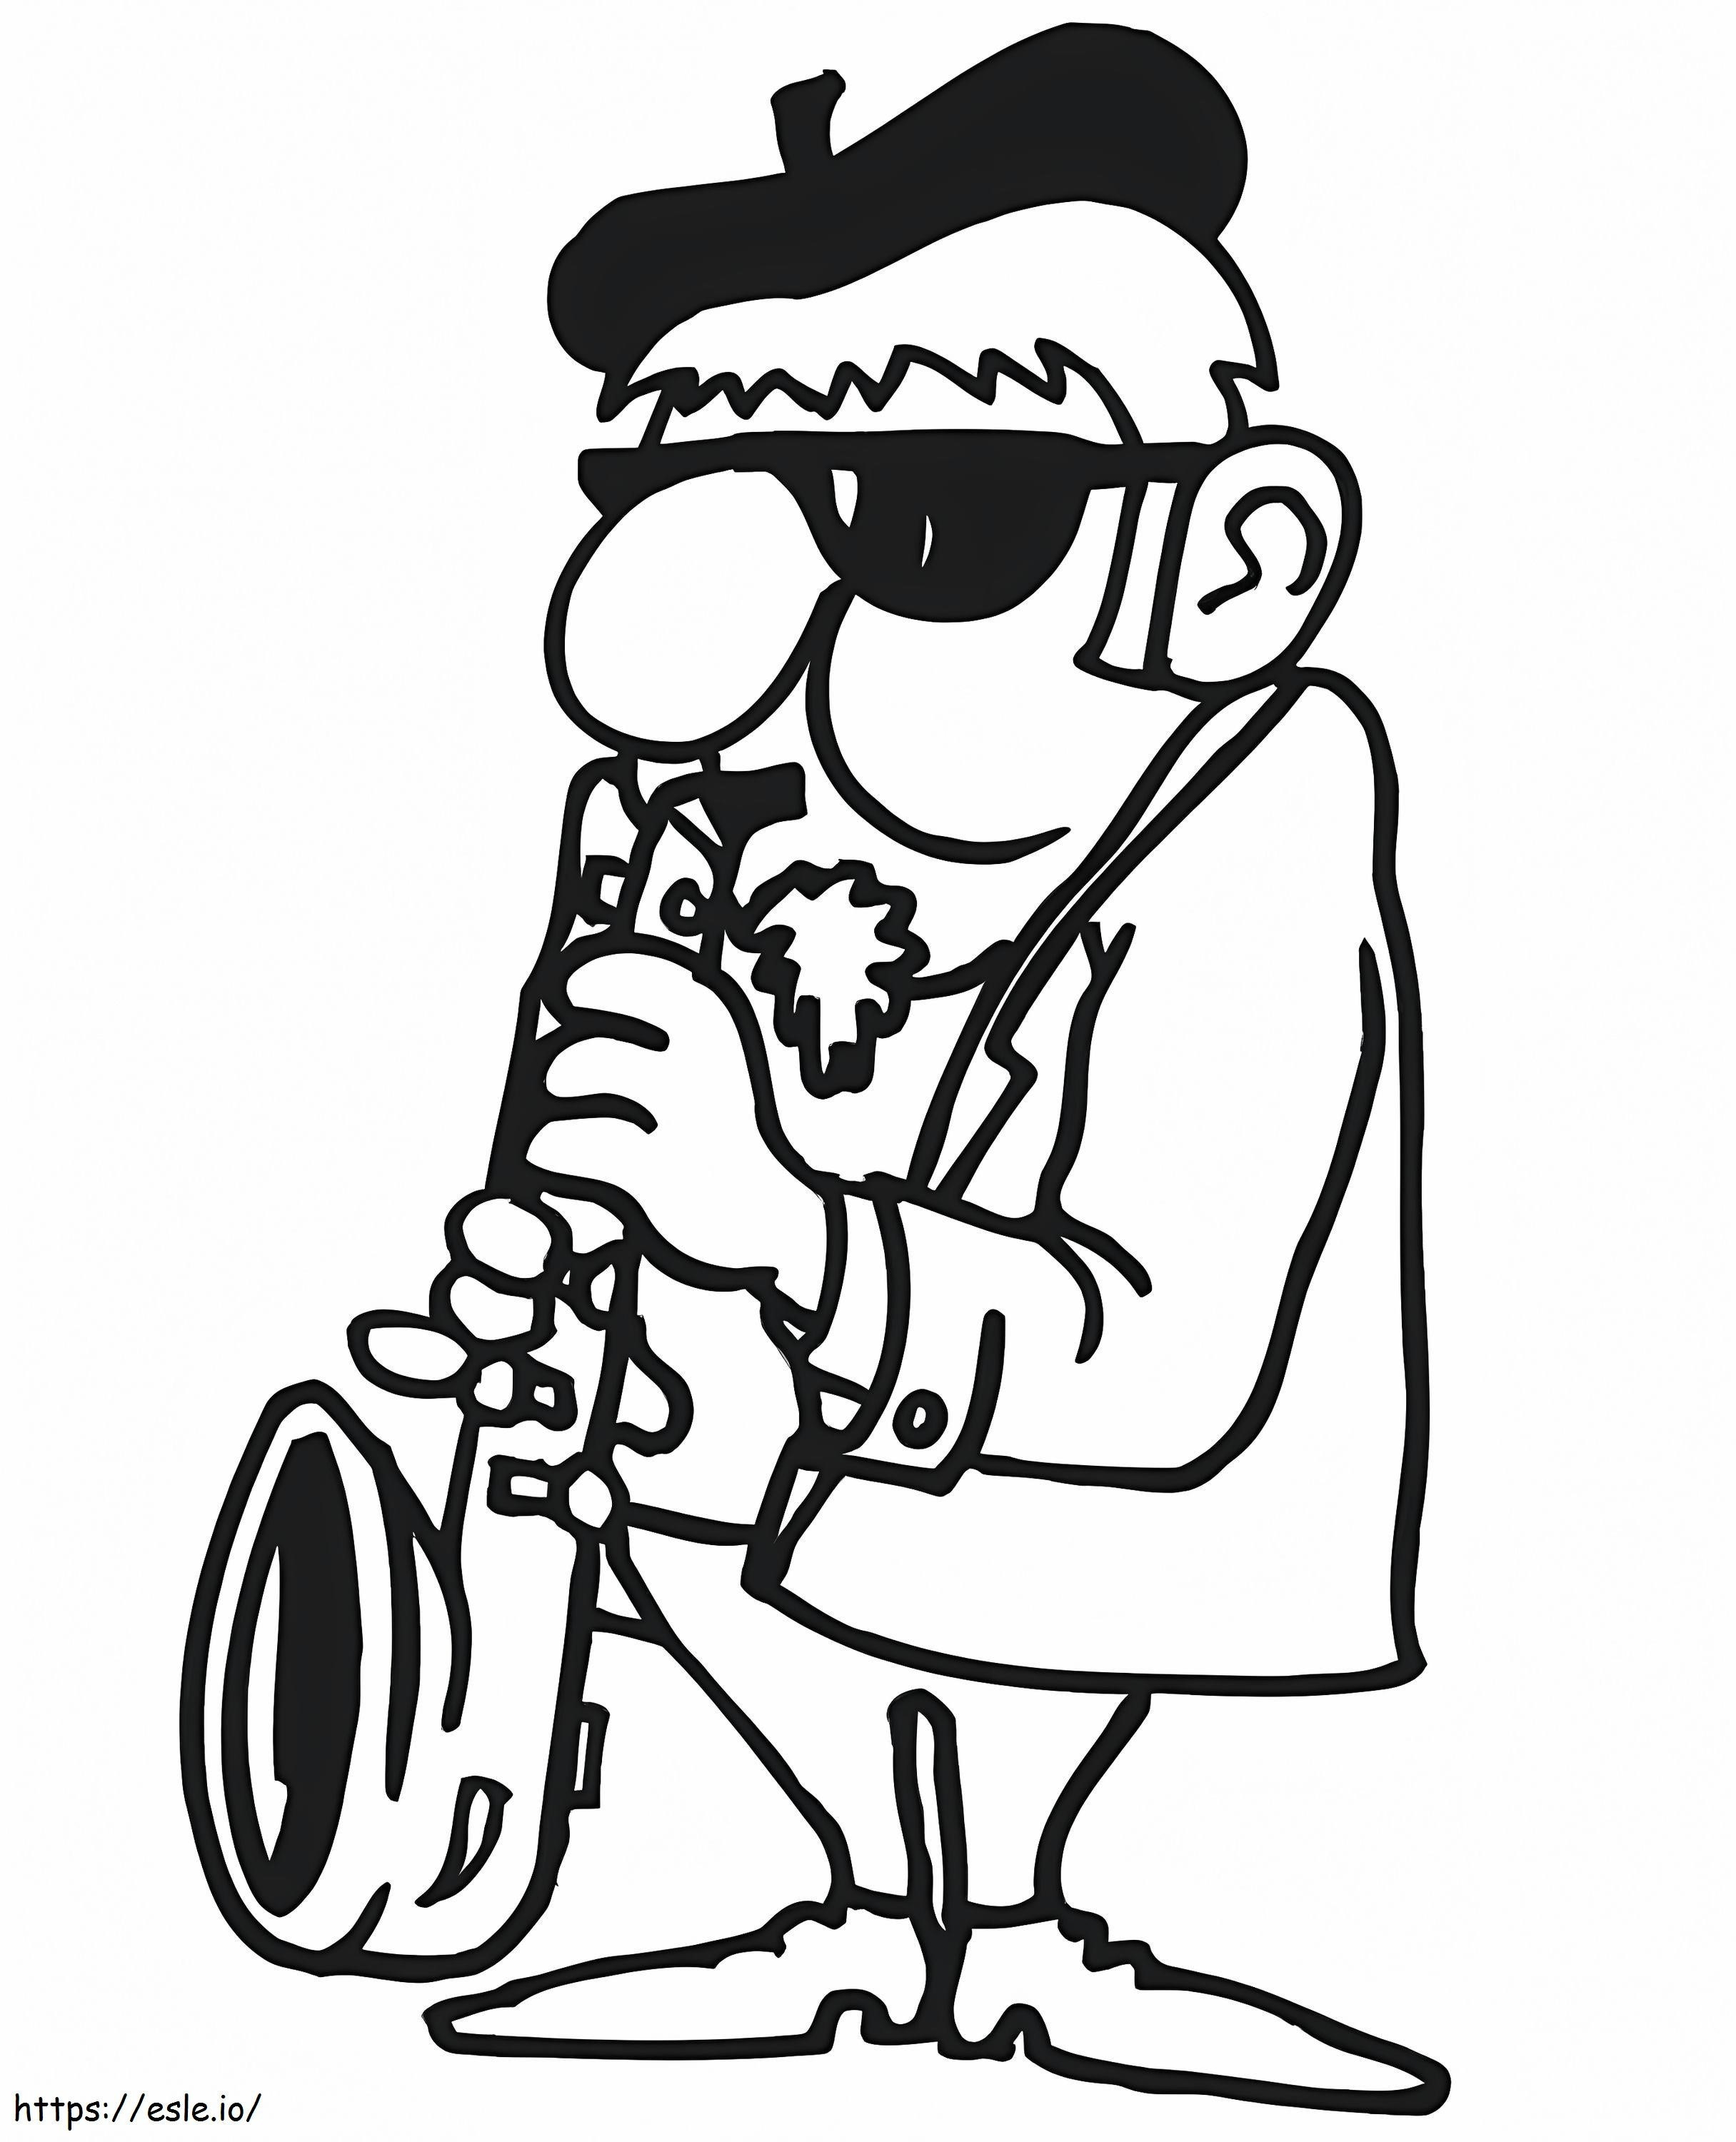 Vechi saxofonist de colorat